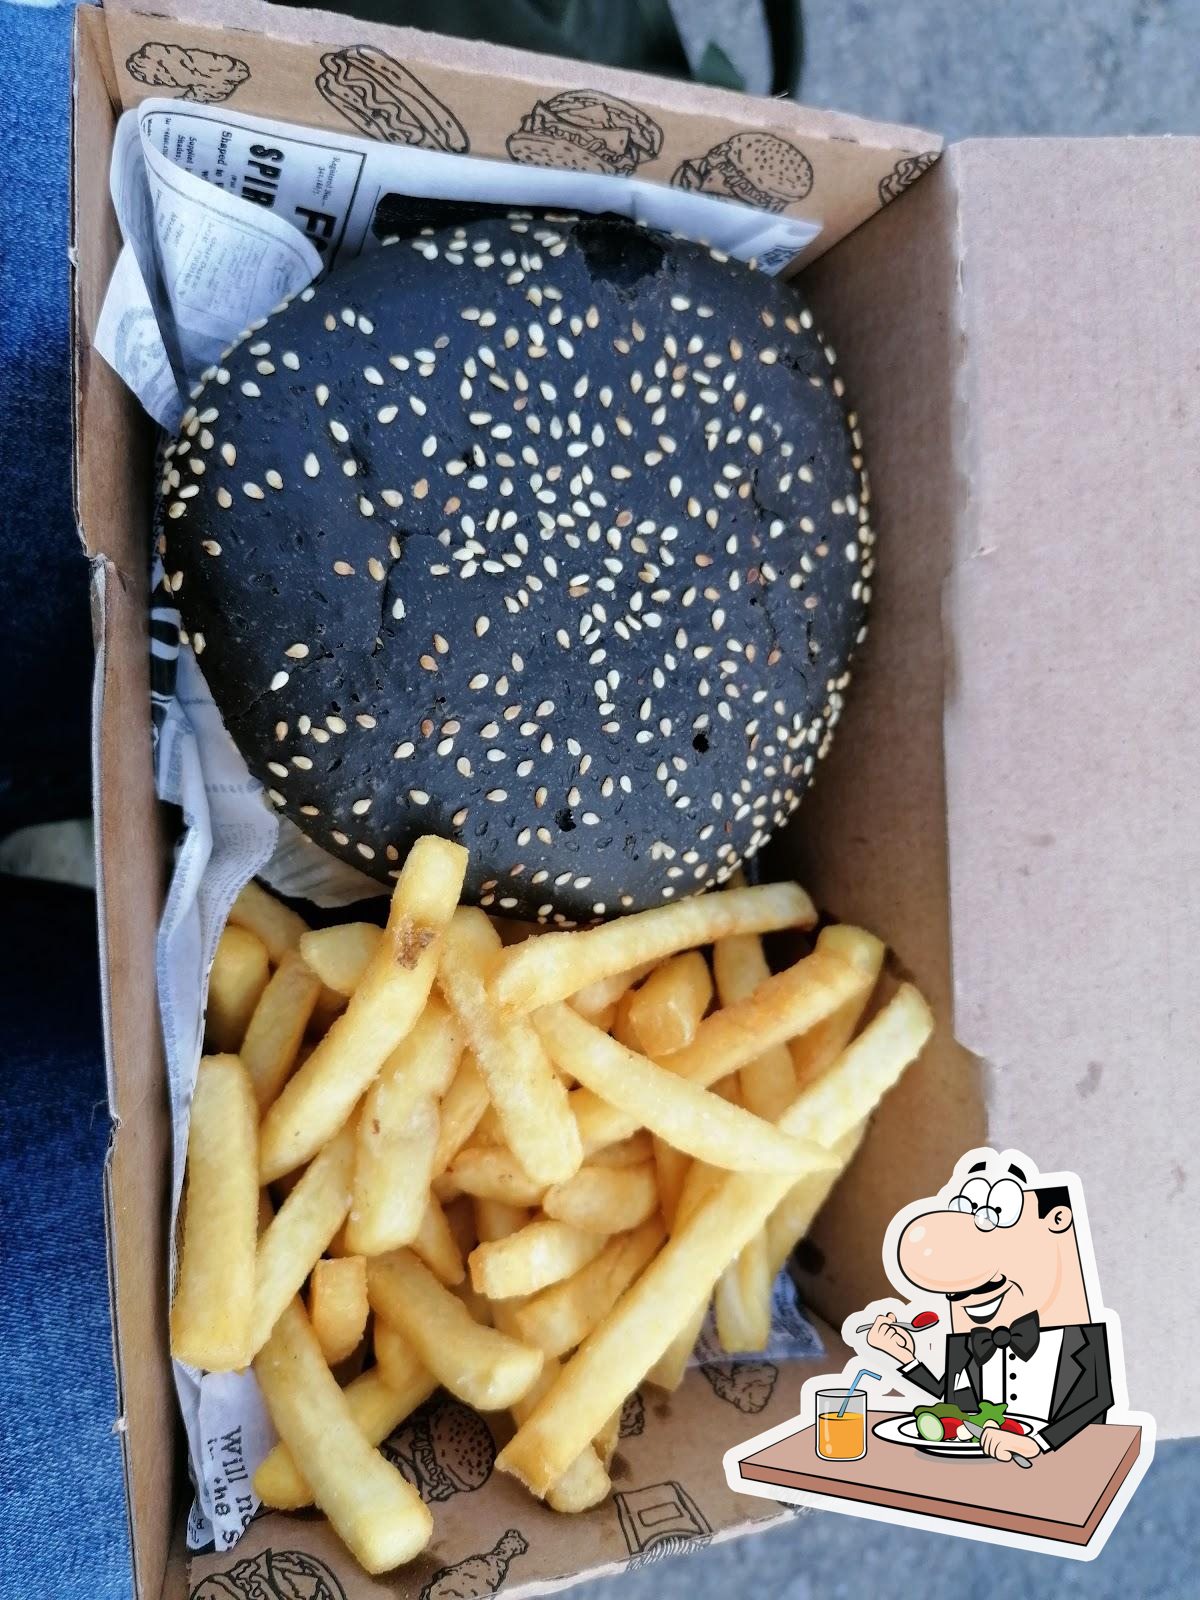 D Burgers Fgura, Wolt, Delivery